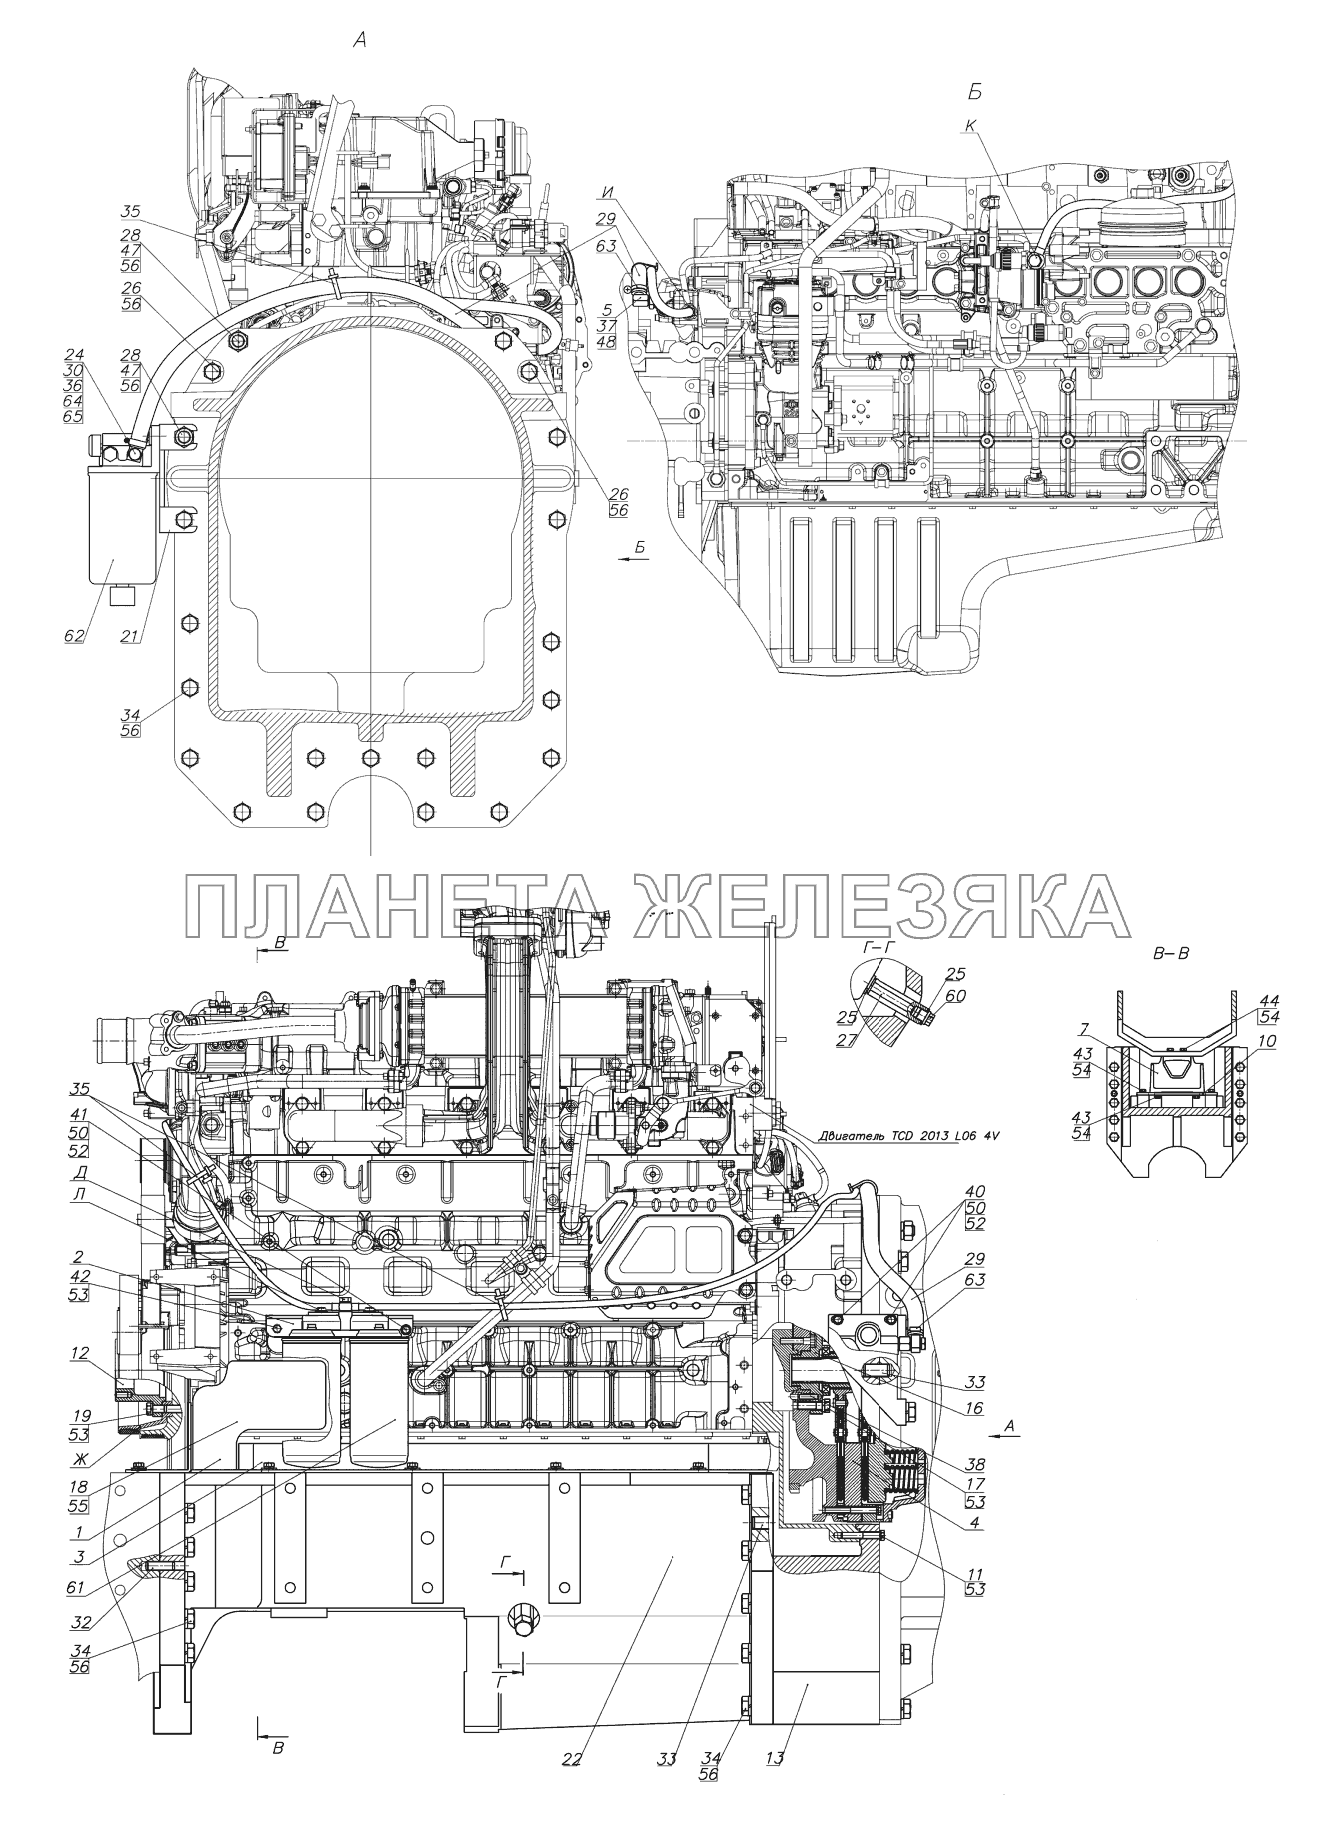 Установка двигателя МТЗ-3522